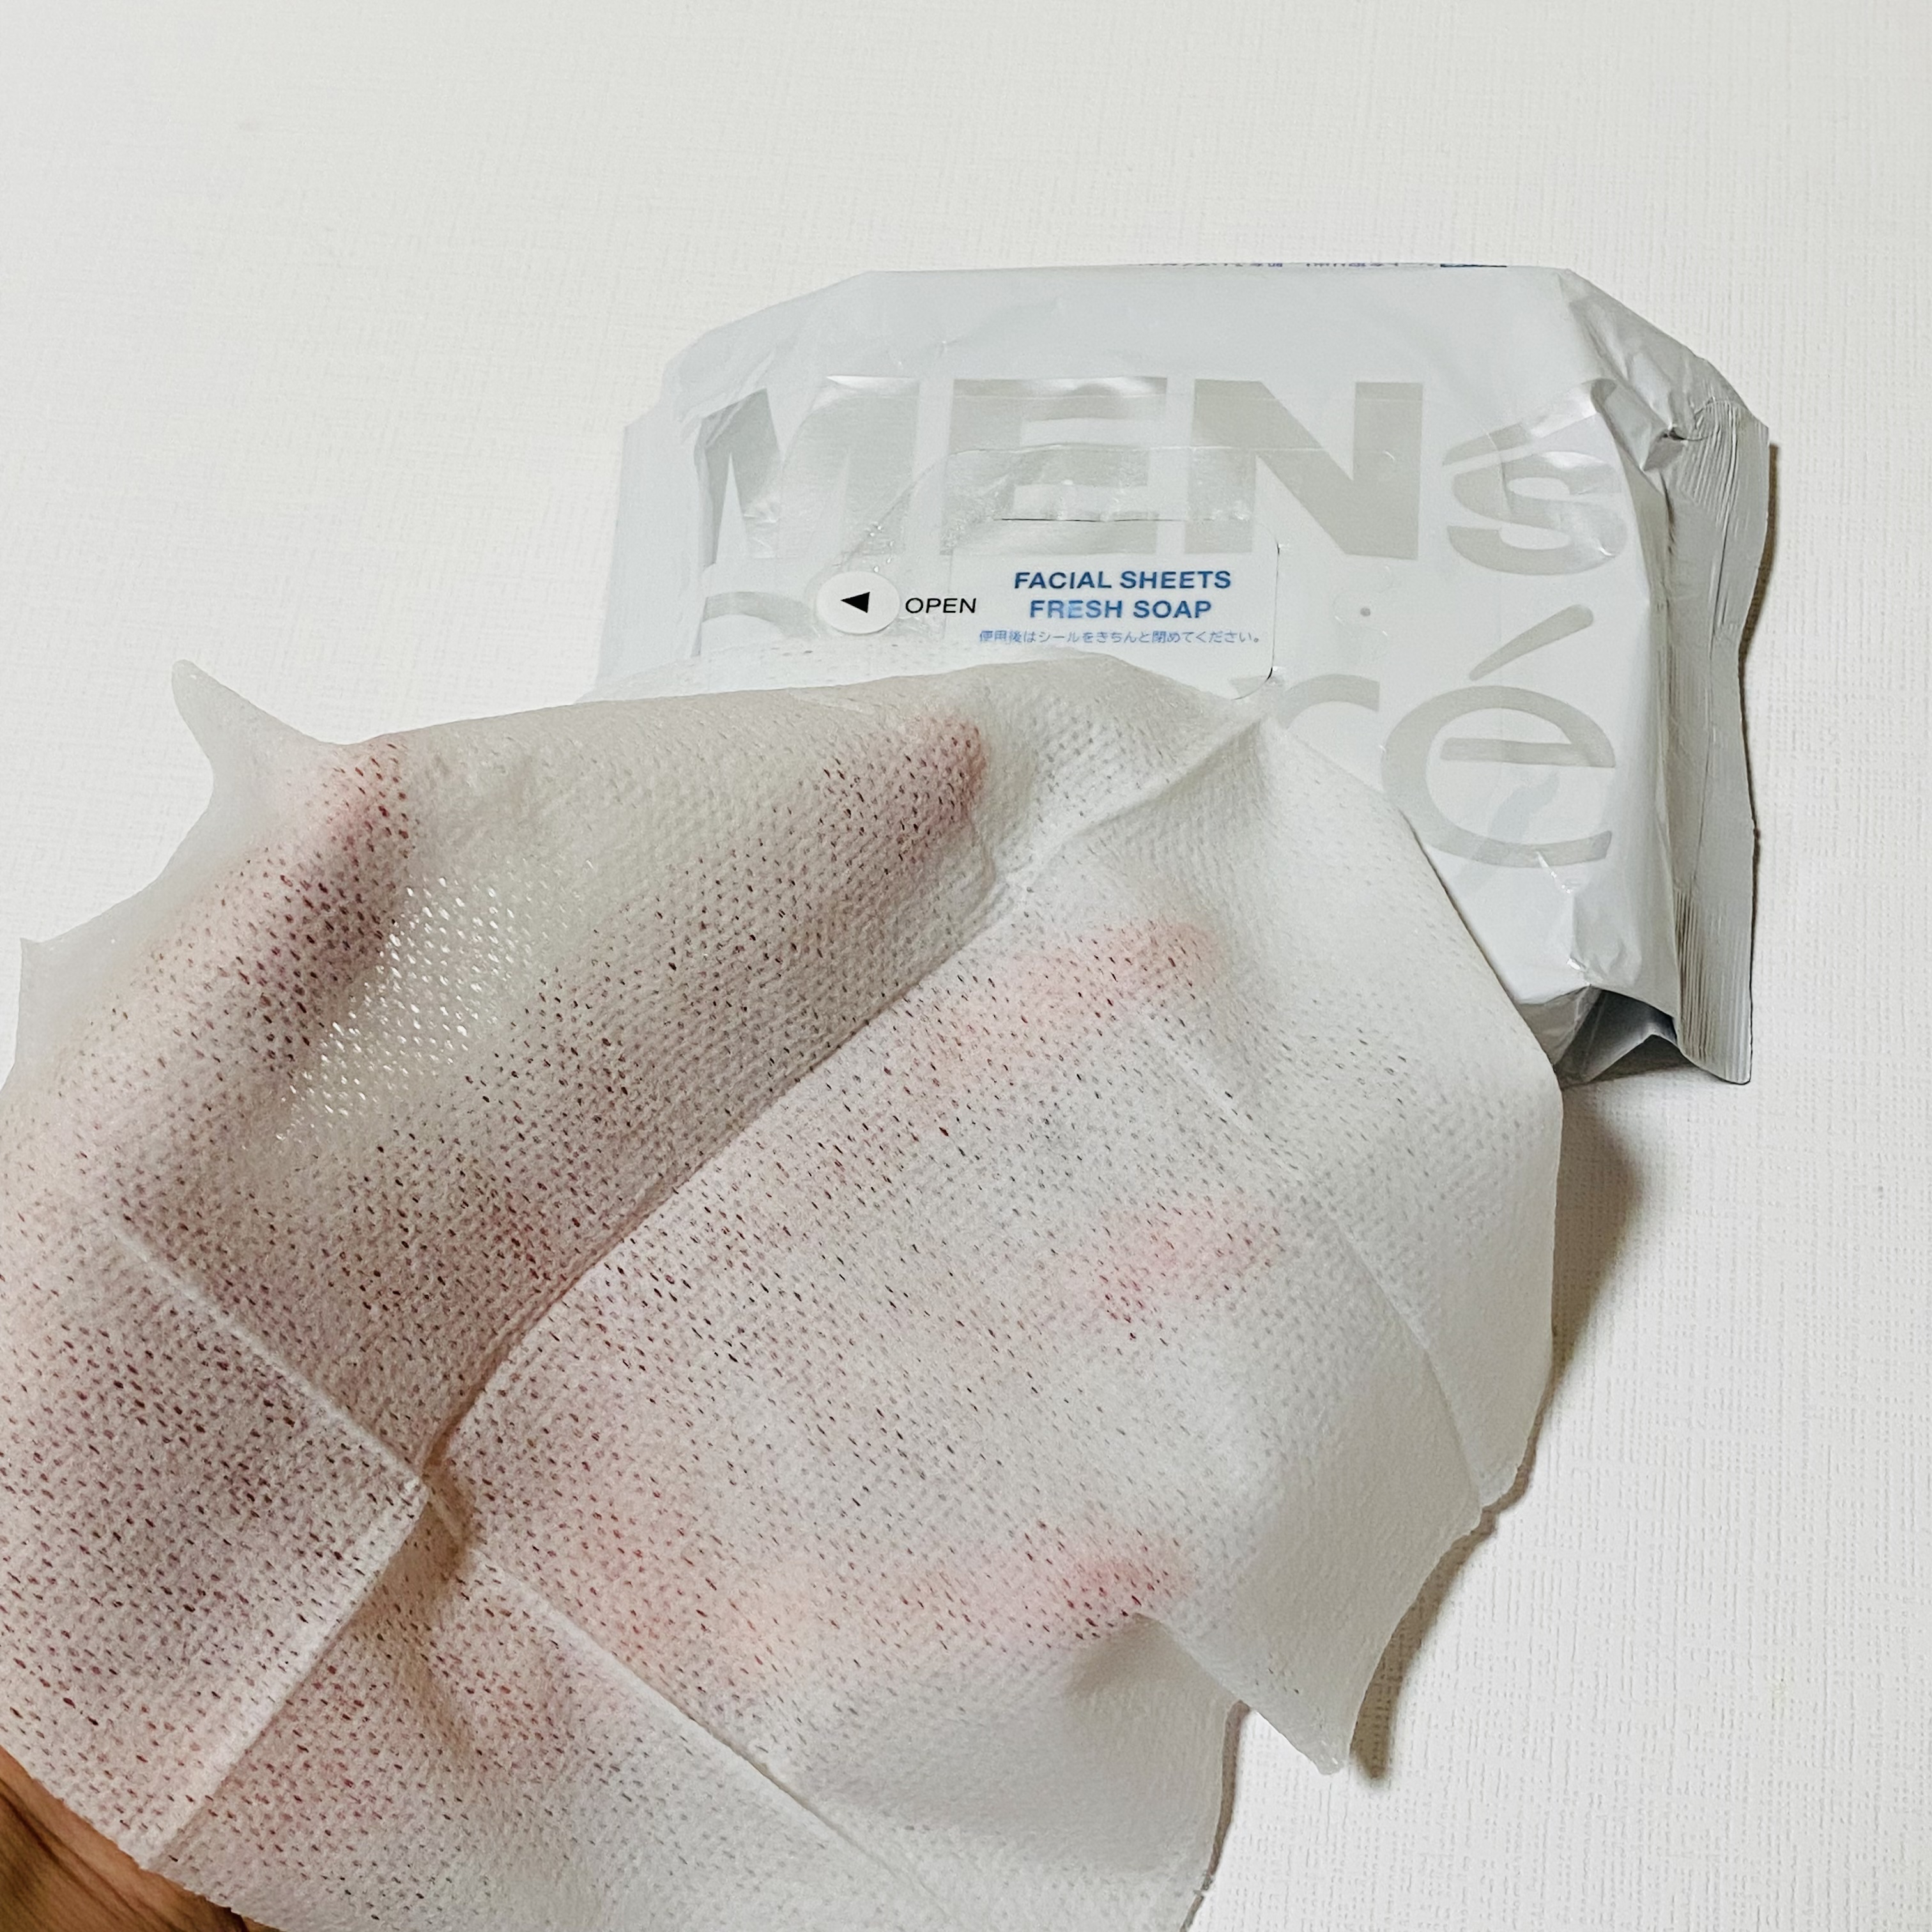 MEN's Bioré(メンズビオレ) 洗顔シートに関するminoriさんの口コミ画像2